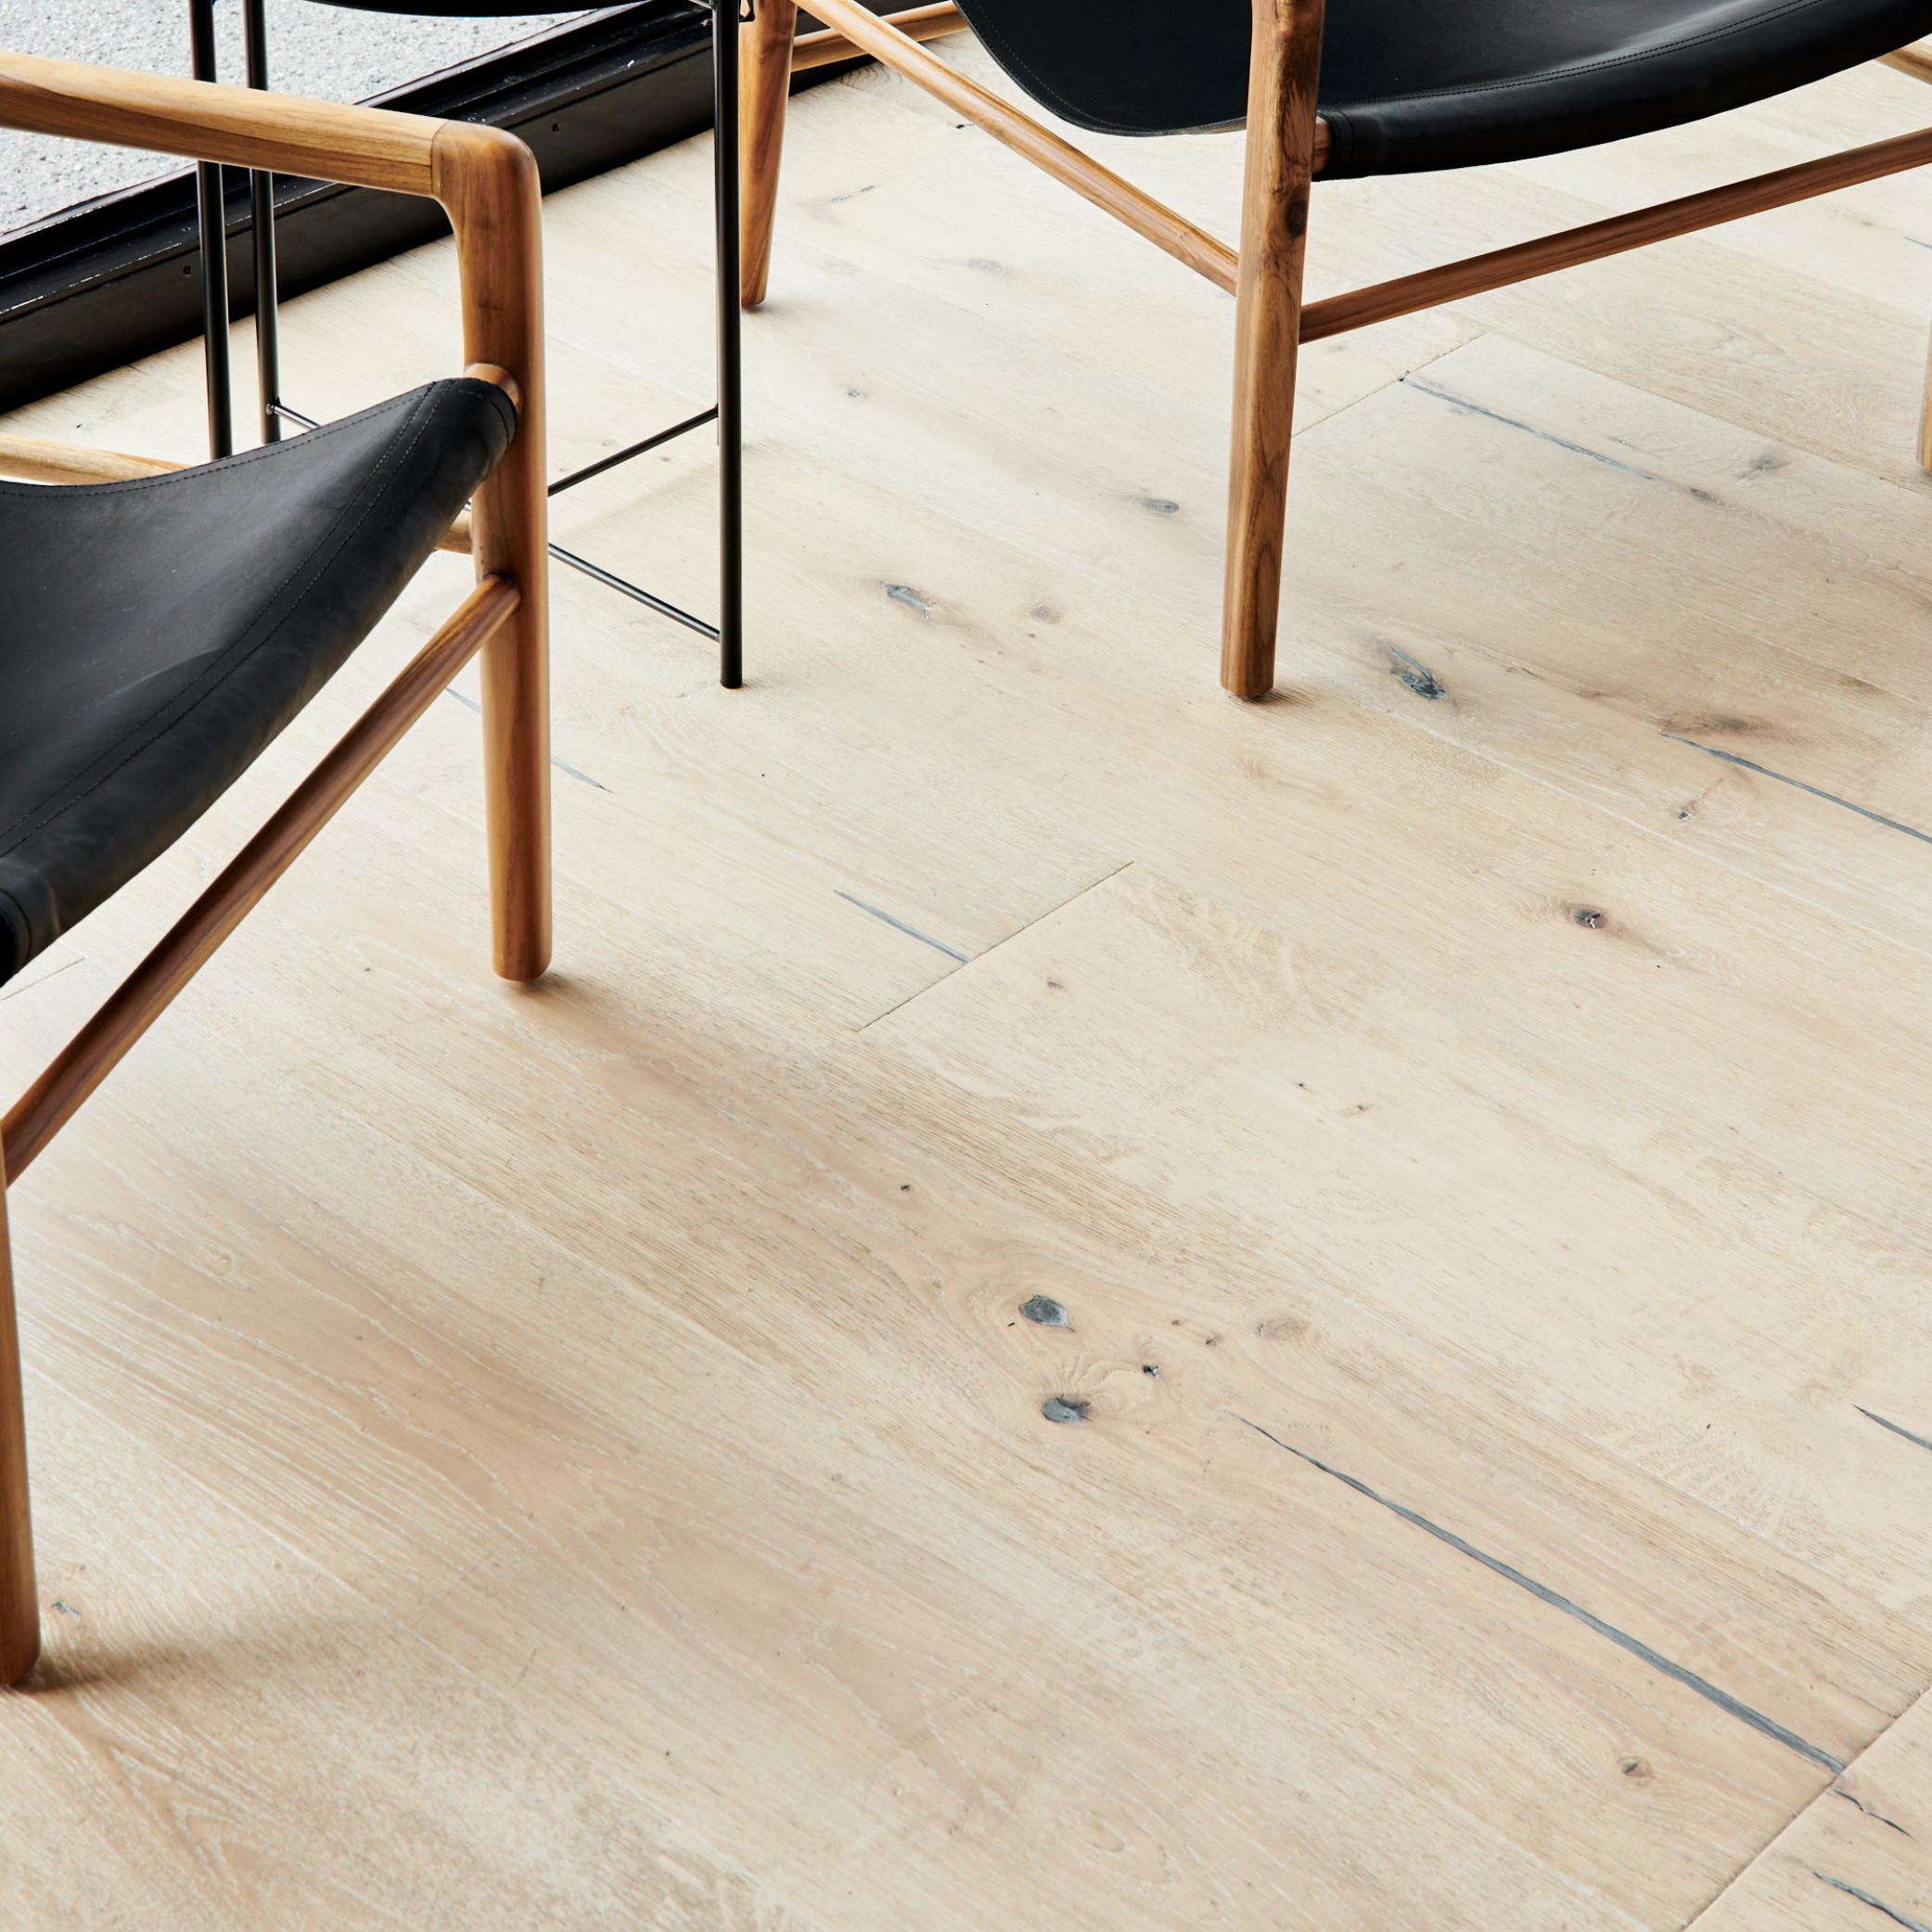 European Oak Flooring Care And, Cleaning Oak Hardwood Floors